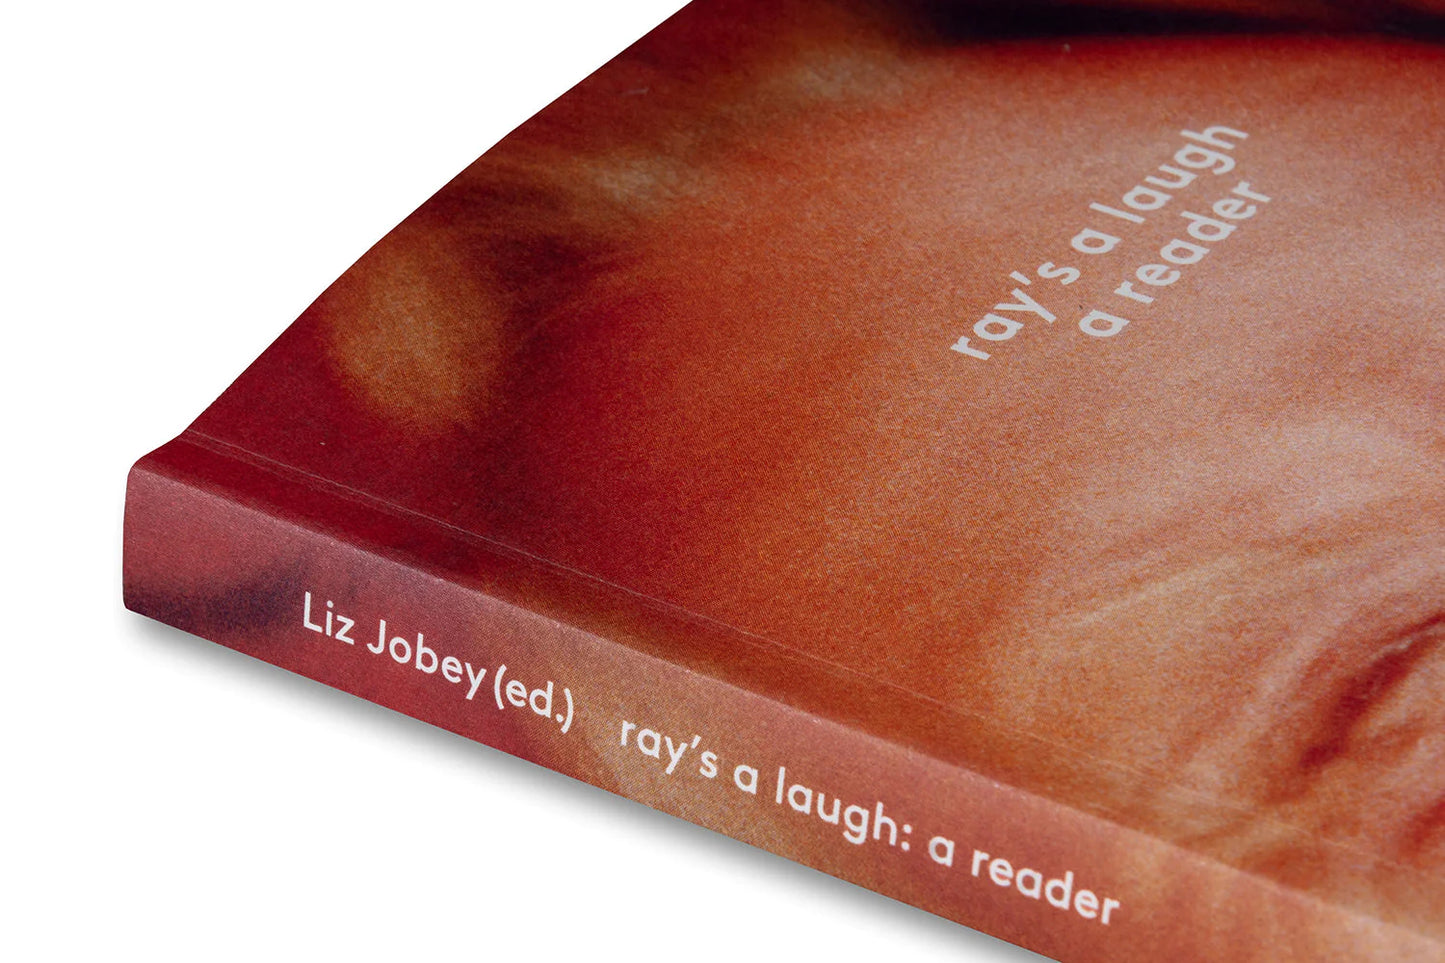 Liz Jobey - Ray's a Laugh: A Reader